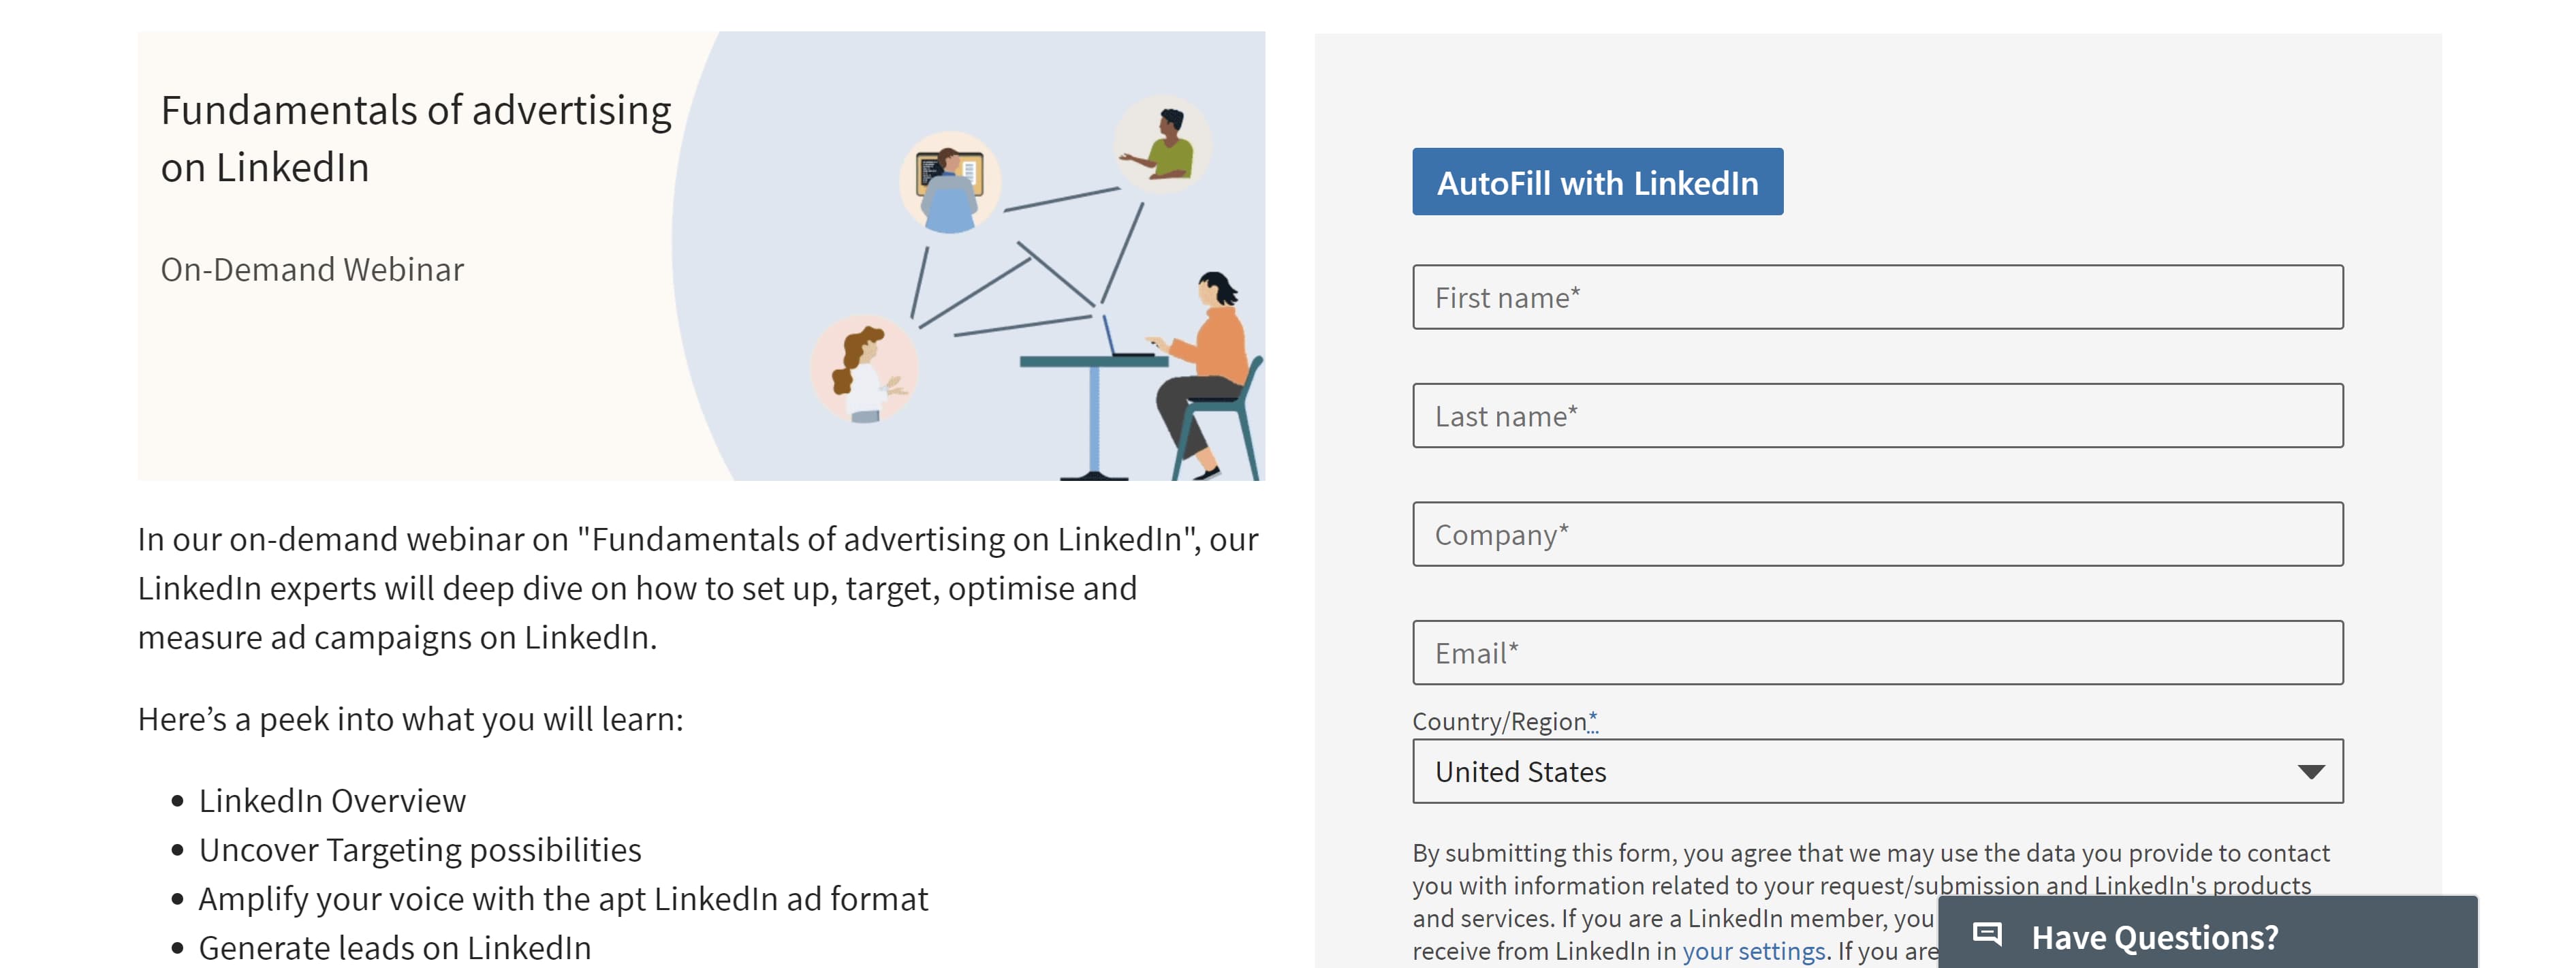 LinkedIn webinar example landing page example